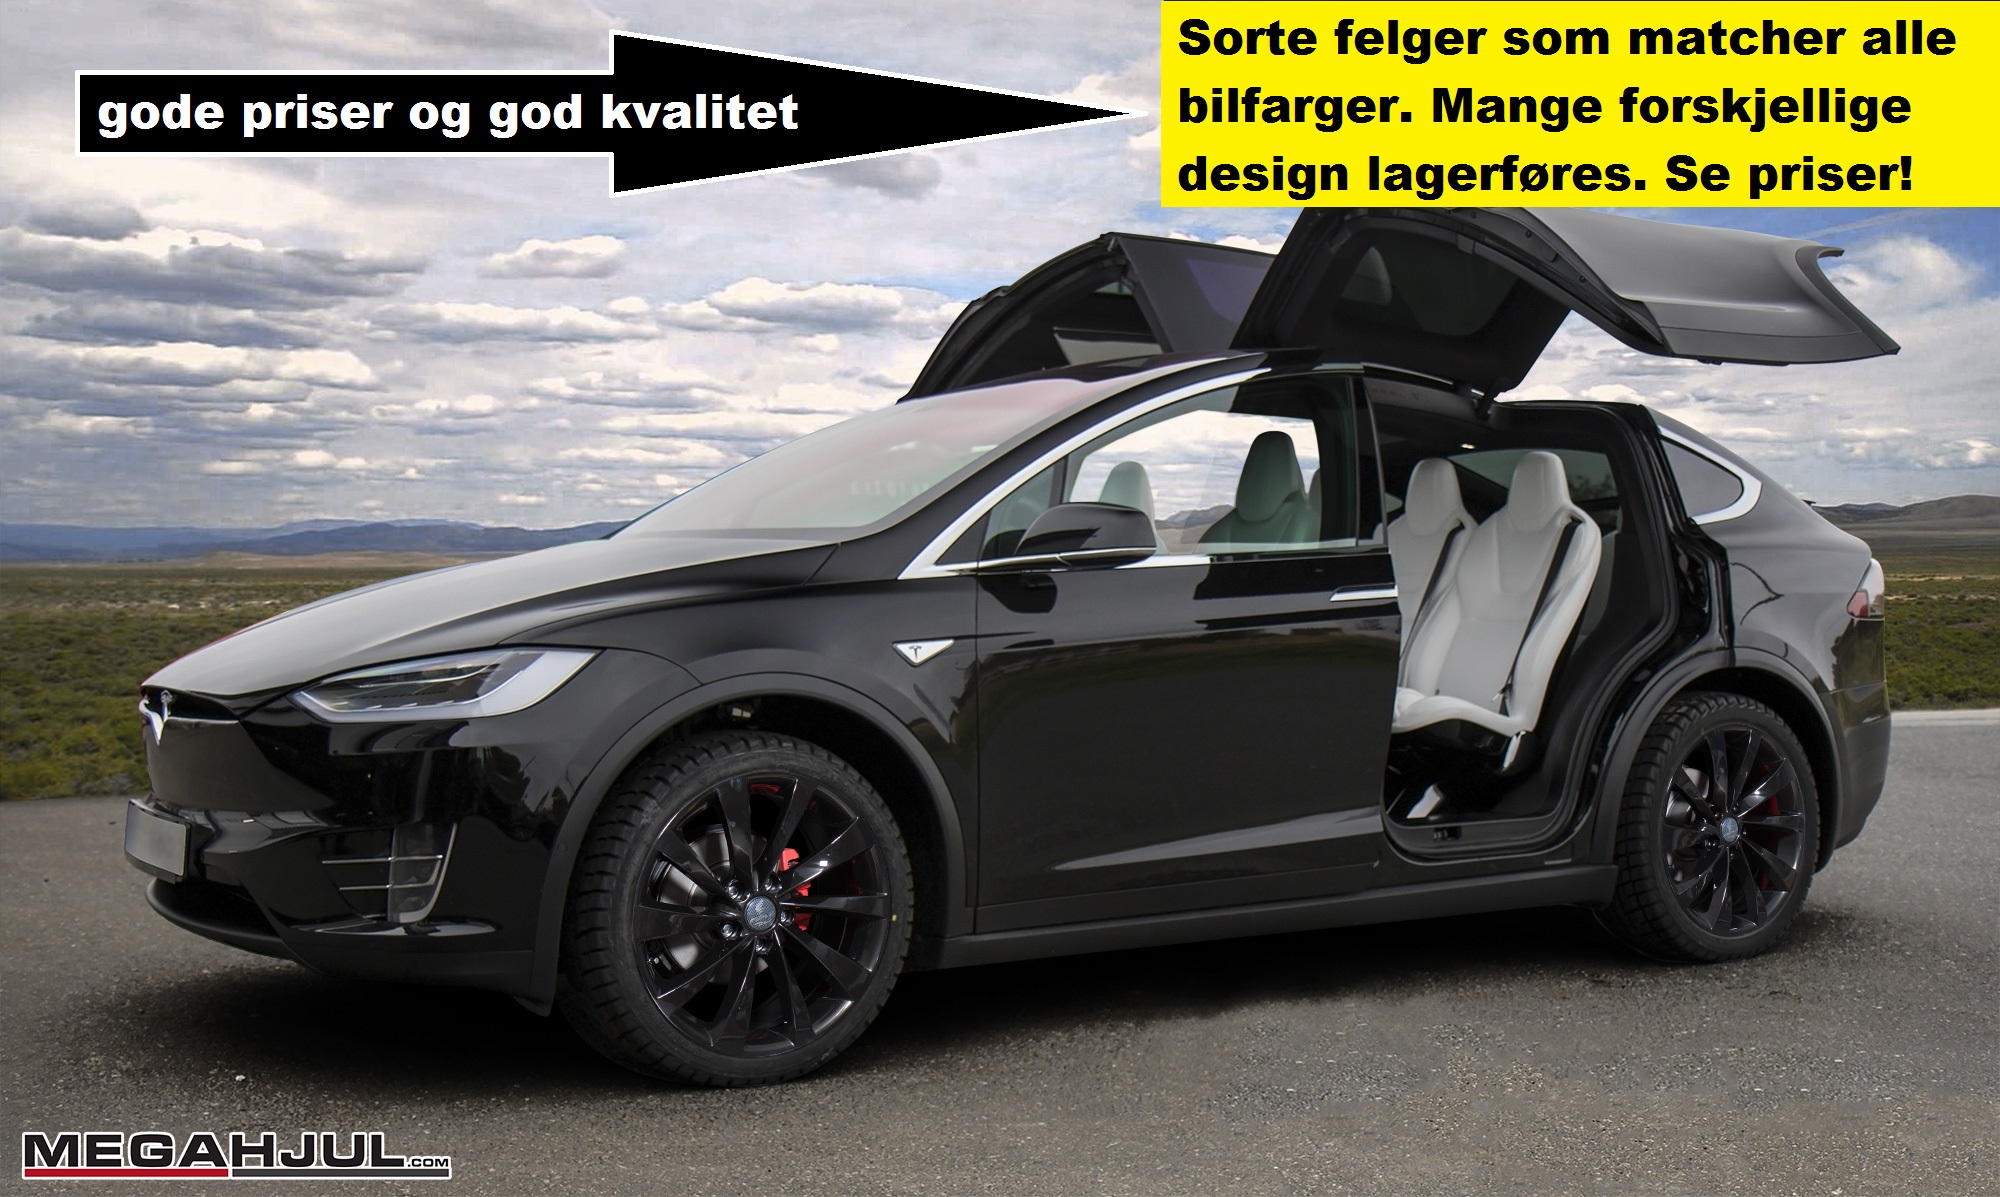 Vinterhjul anbefalt til Tesla Model X